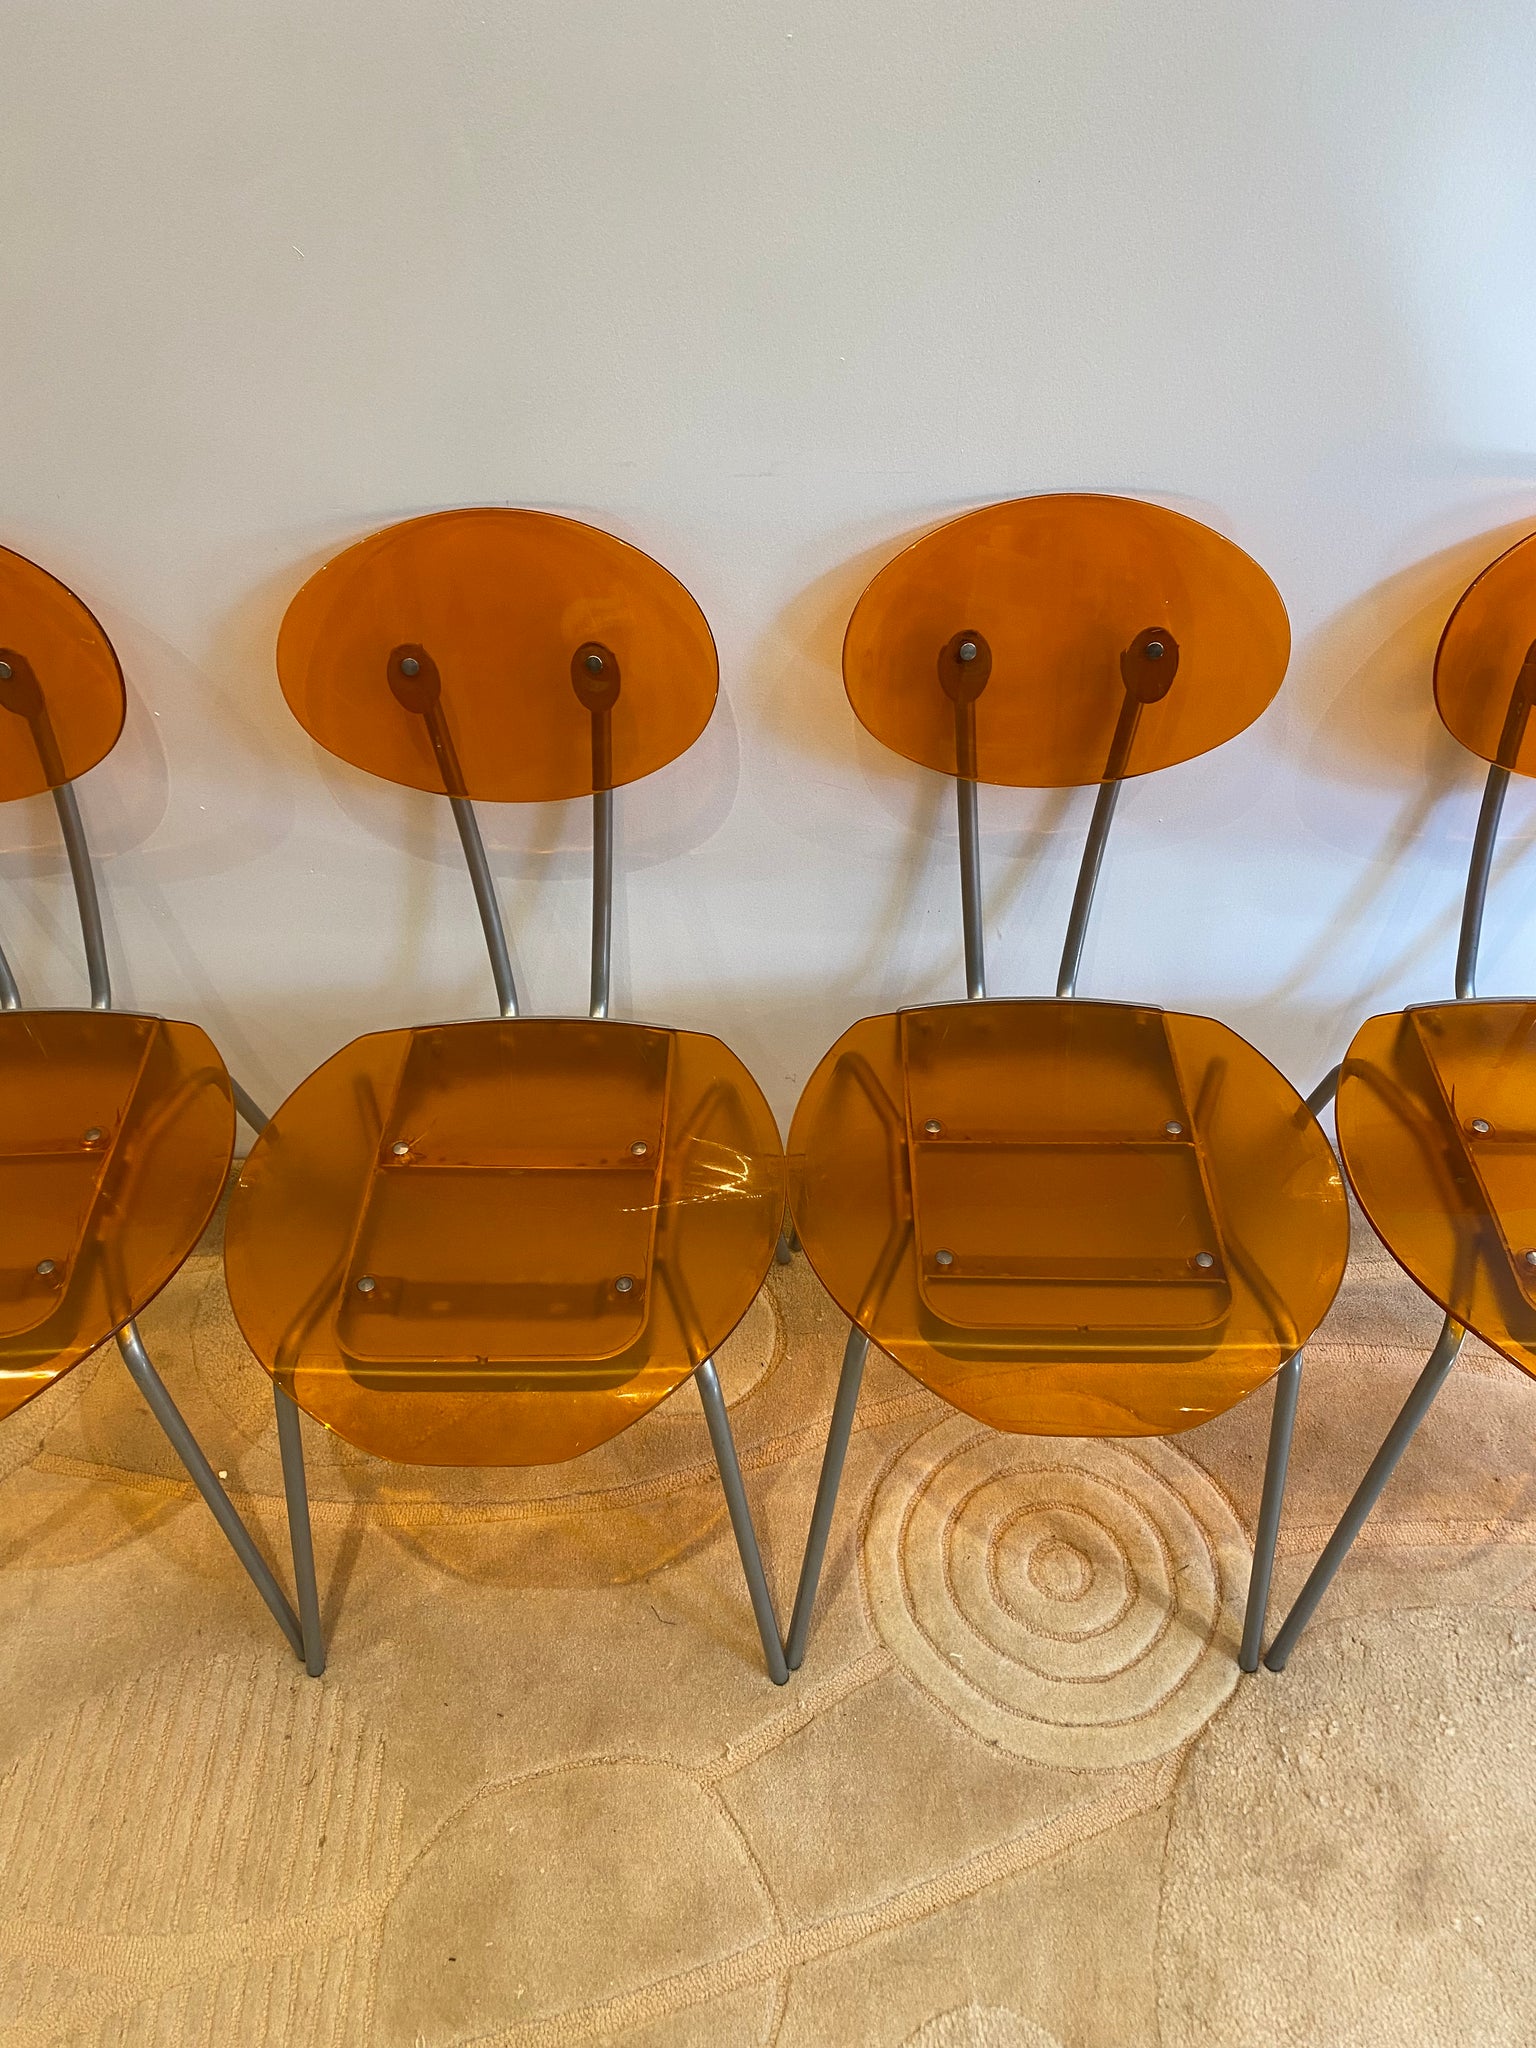 Orange lucite & metal chairs